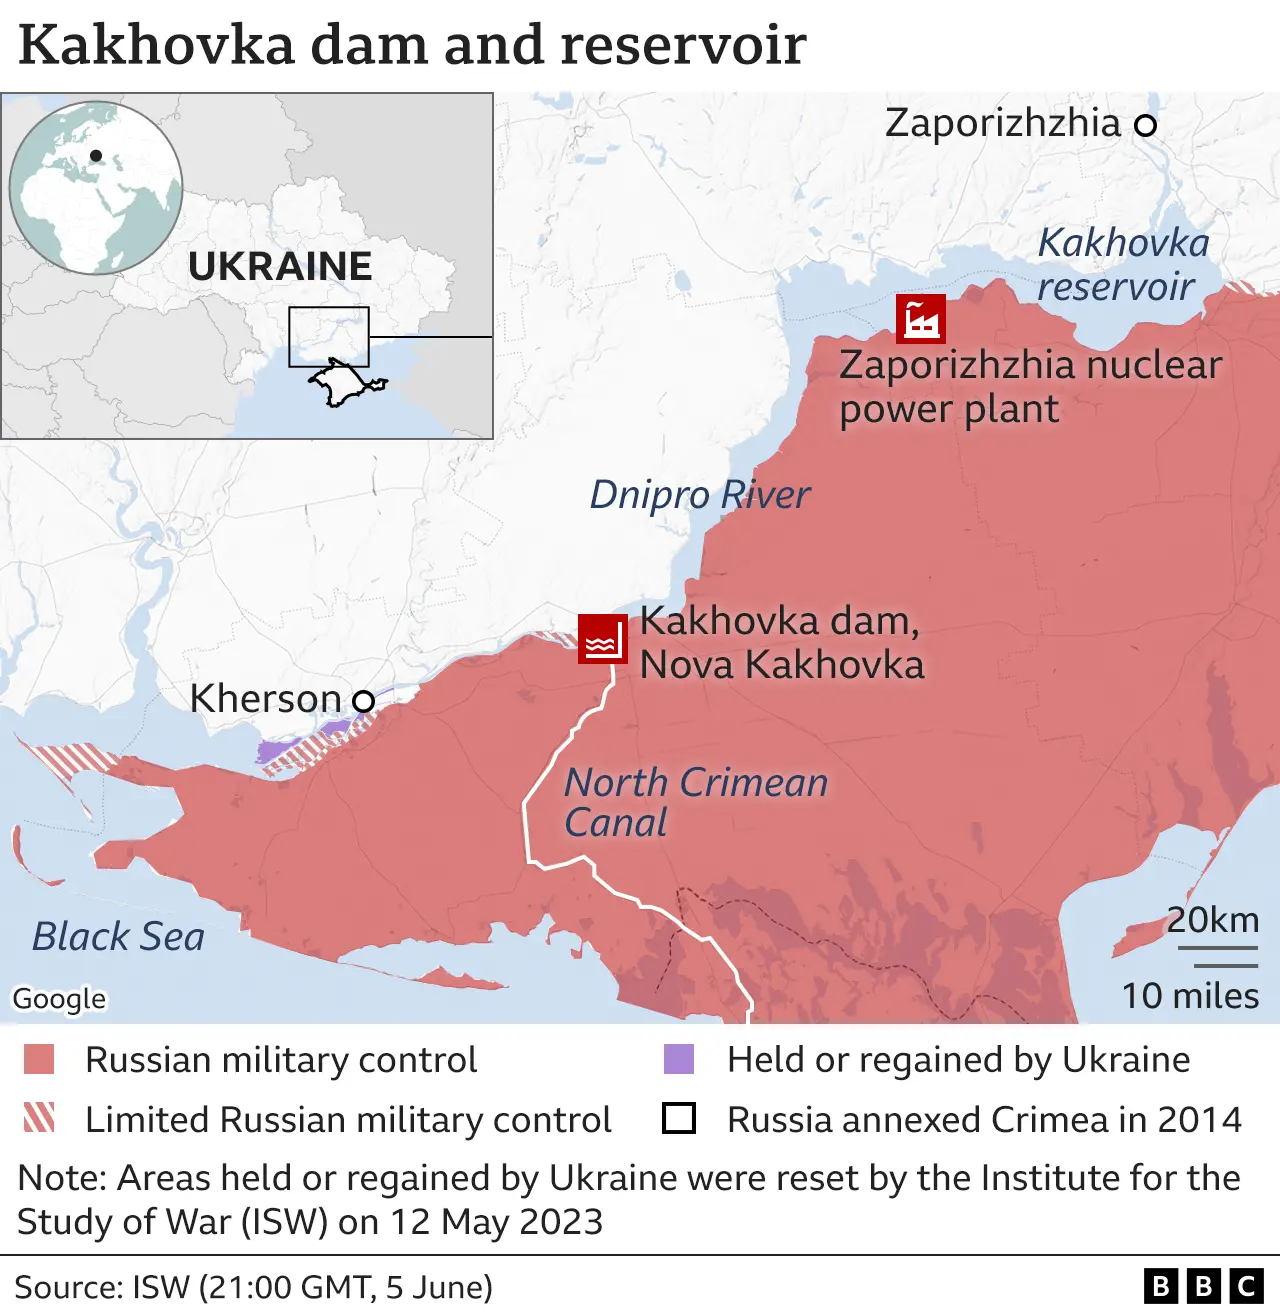 Ukraine dam: Thousands flee floods after dam collapse near Nova Kakhovka